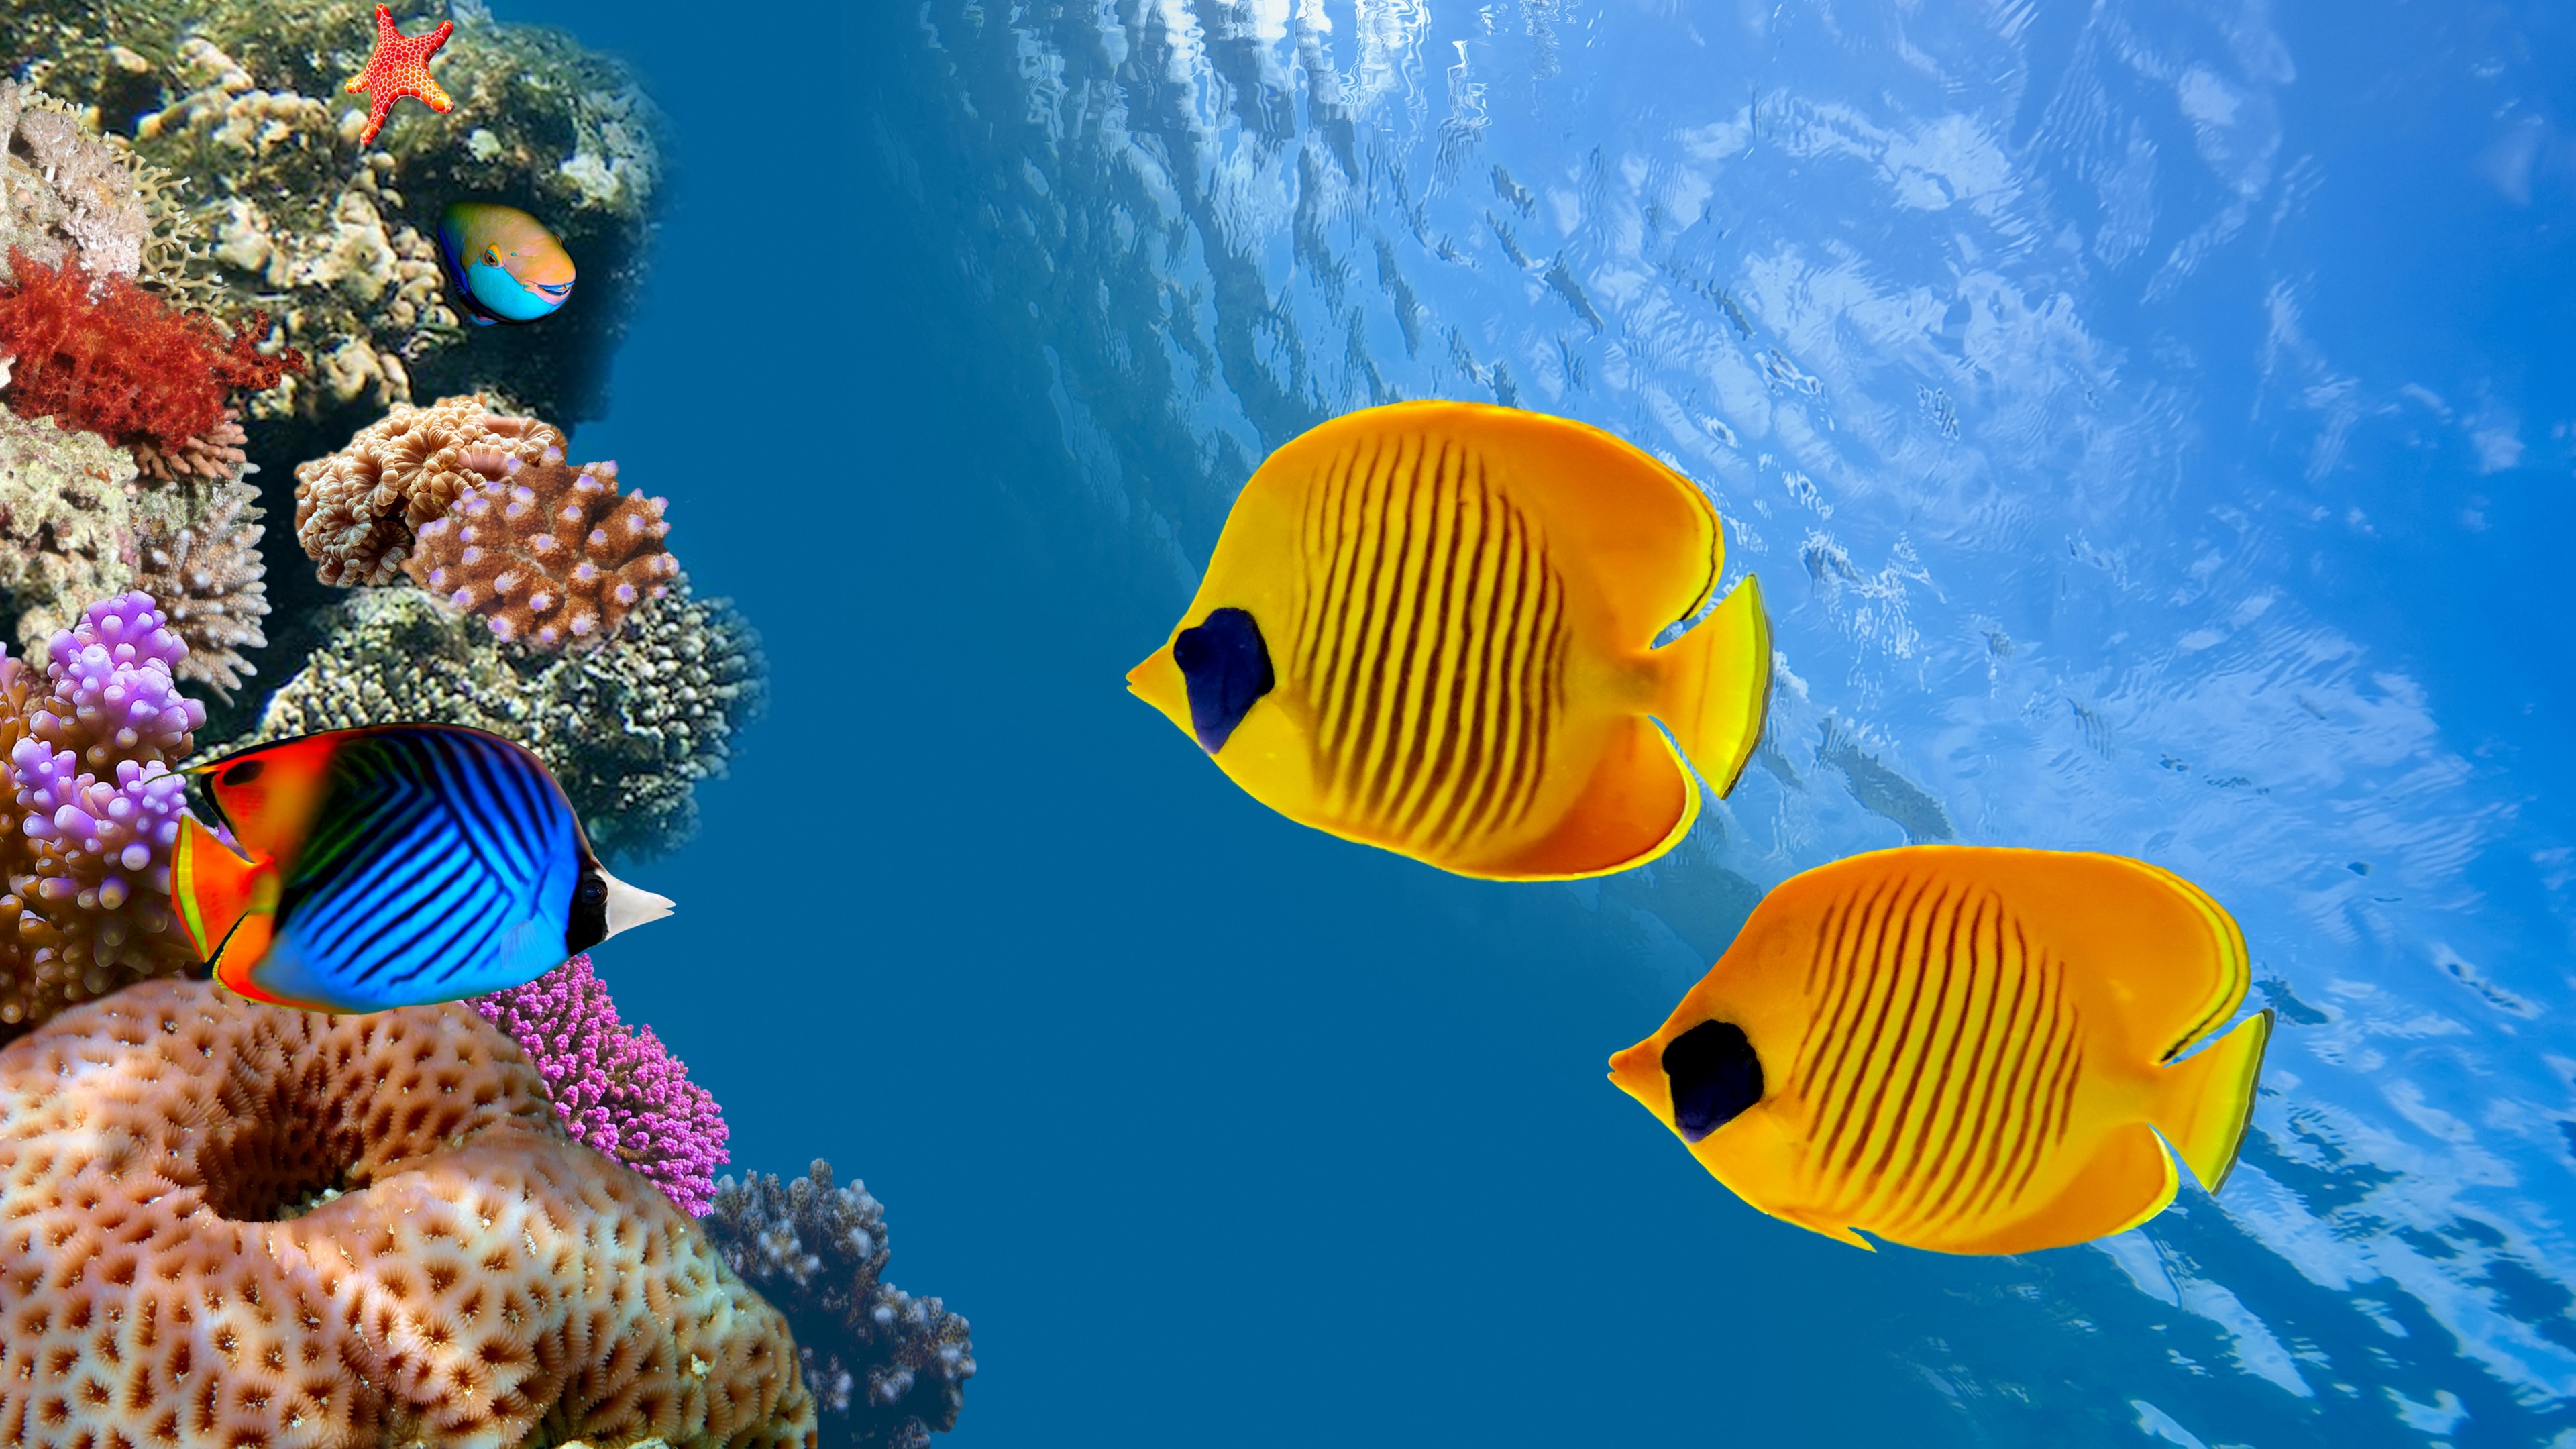 Wallpaper Fish 5k 4k 8k Diving Tourism Cocos